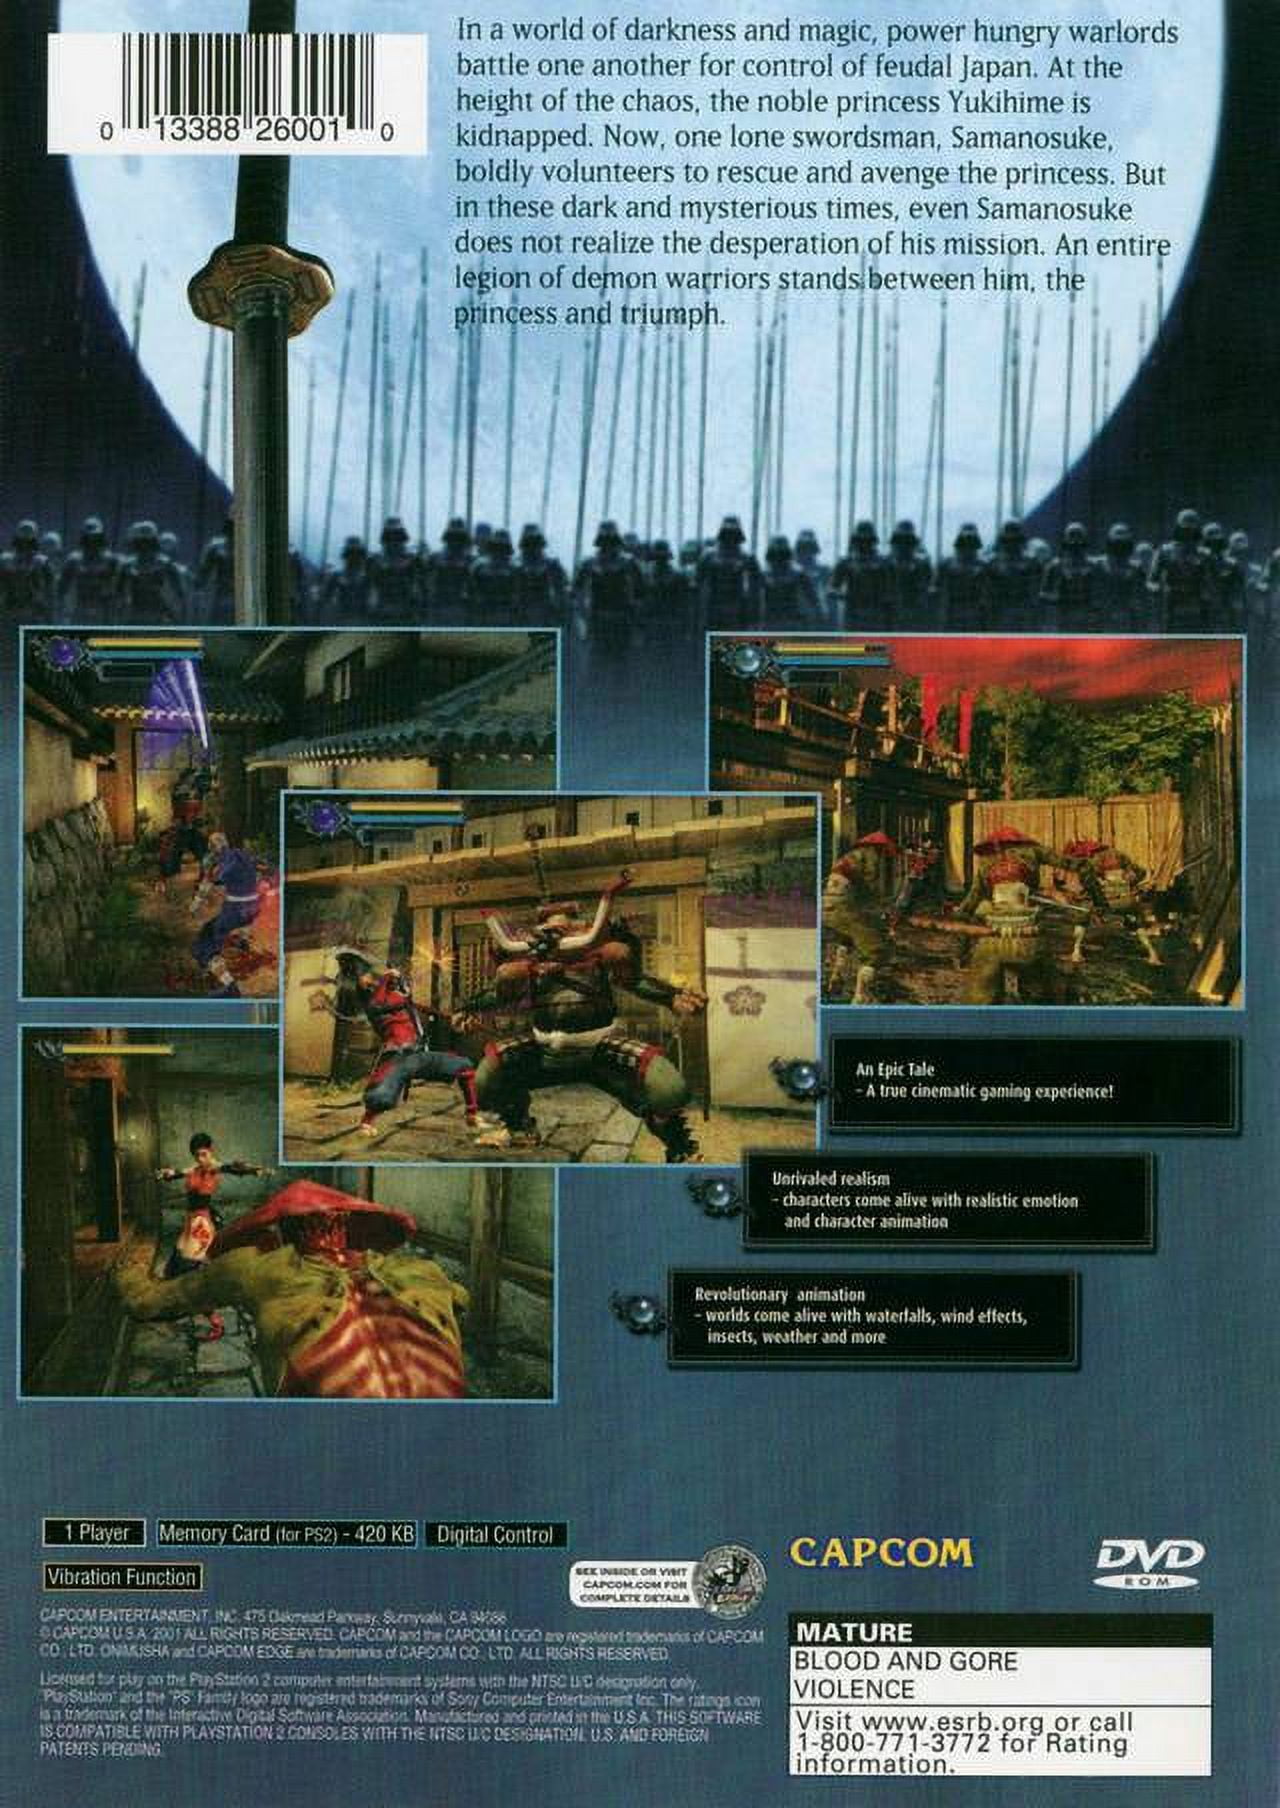 Jogo/cd Playstation 2 Original: Onimusha Warlords - Ps2 - Mf em